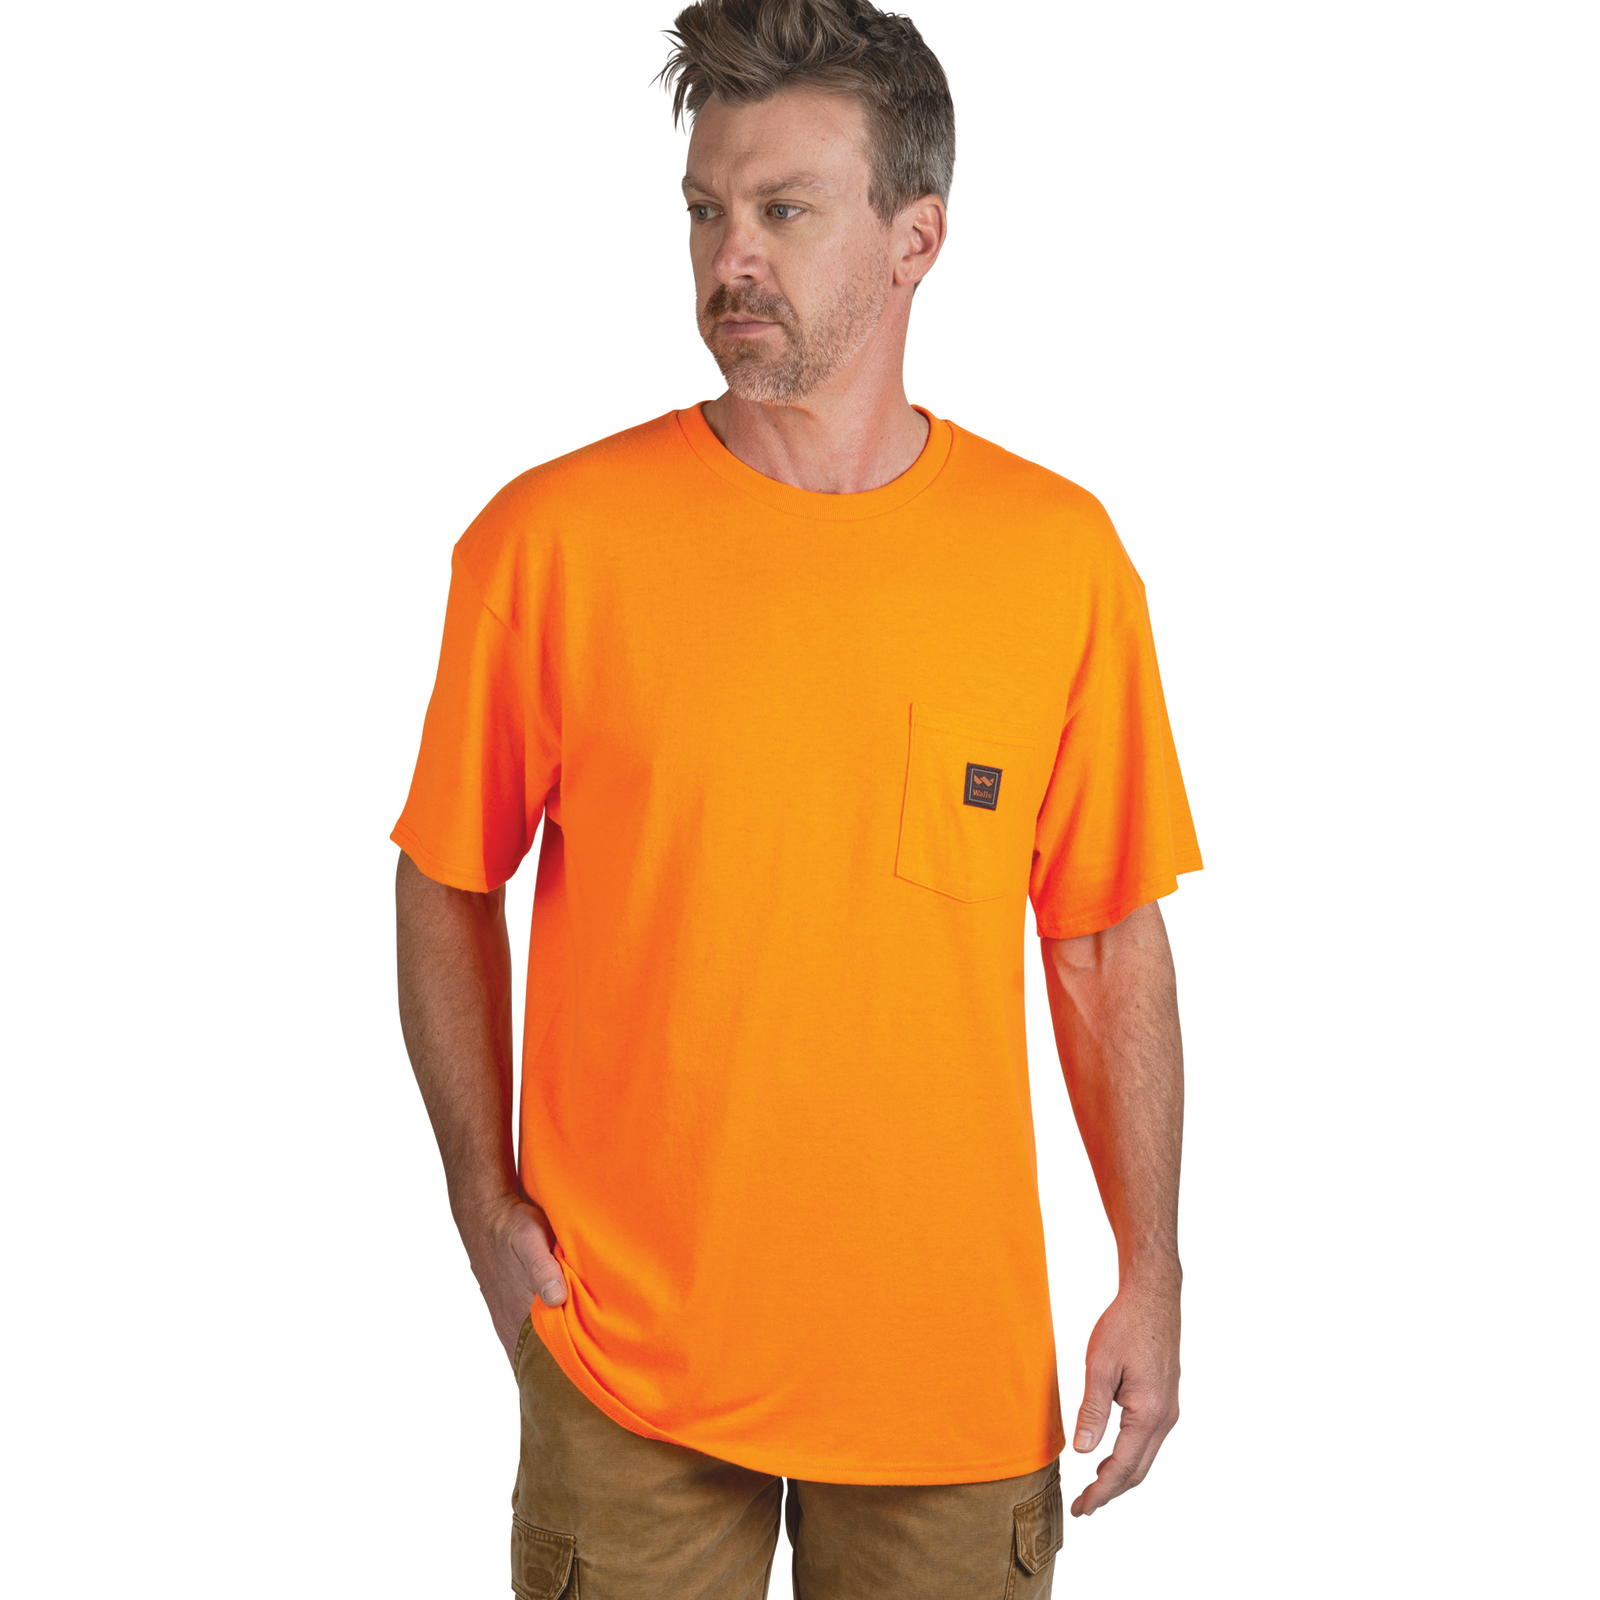 Enhanced Visibility Mesh Safety T-Shirt | Walls®